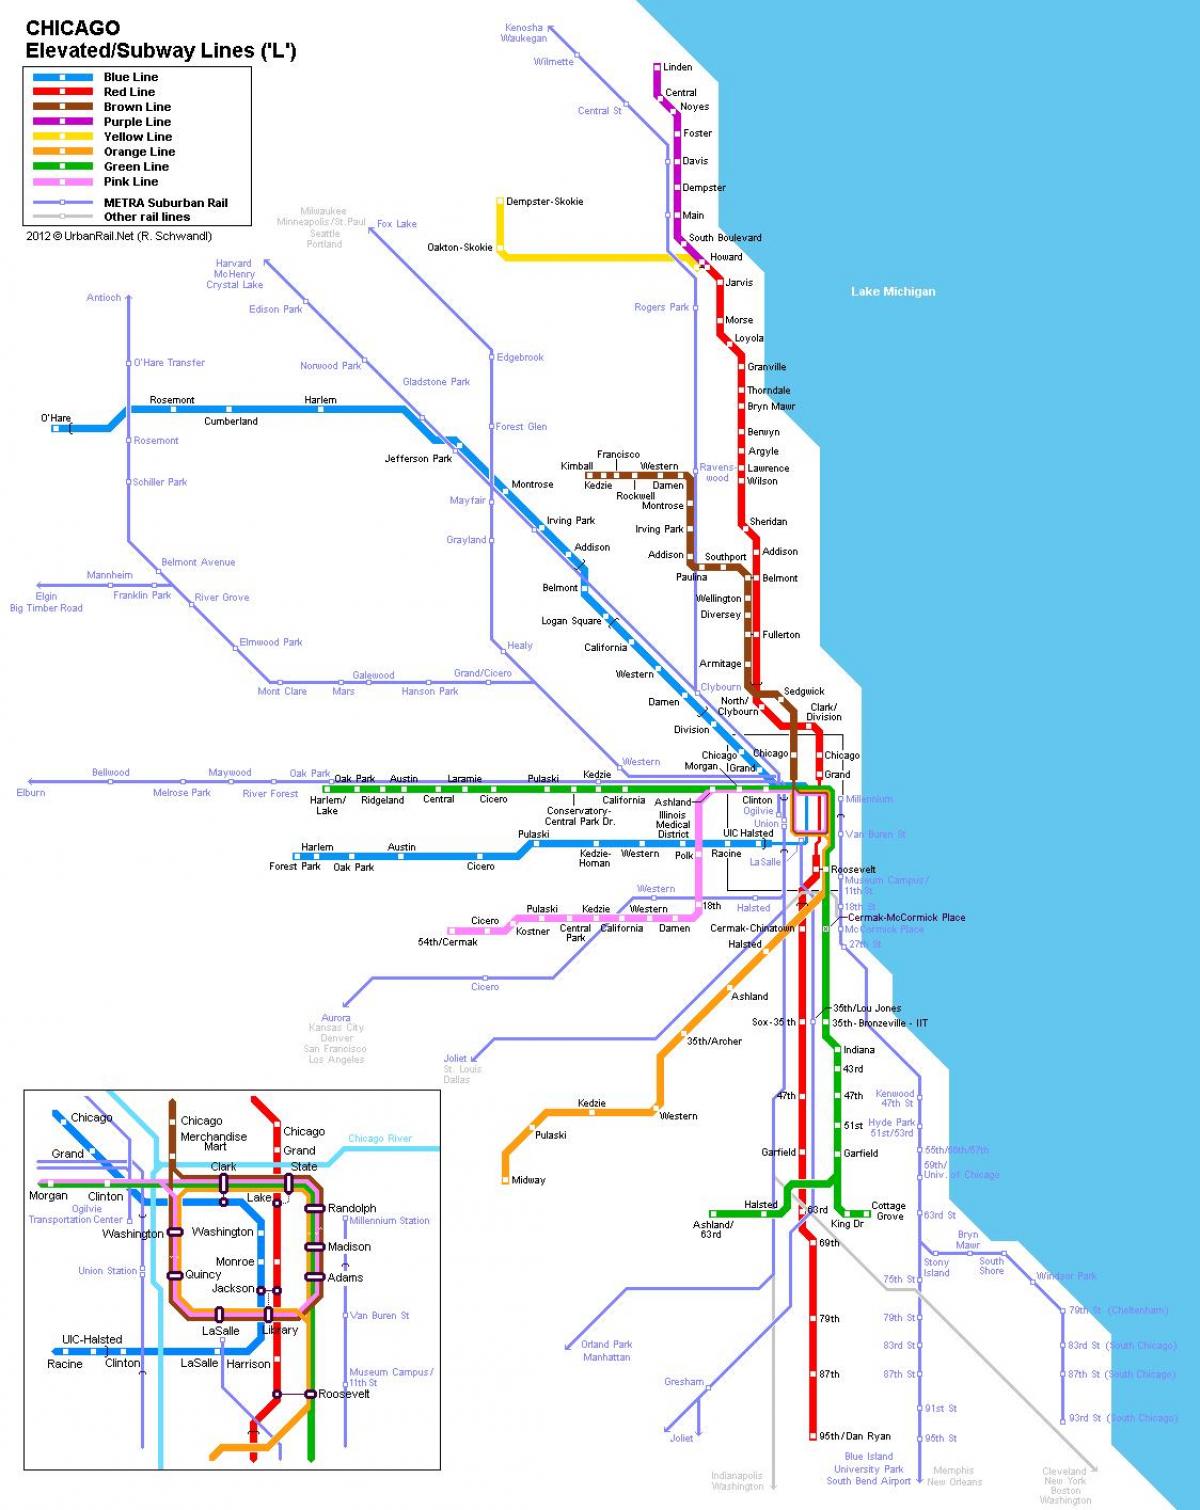 شيكاغو محطة مترو خريطة